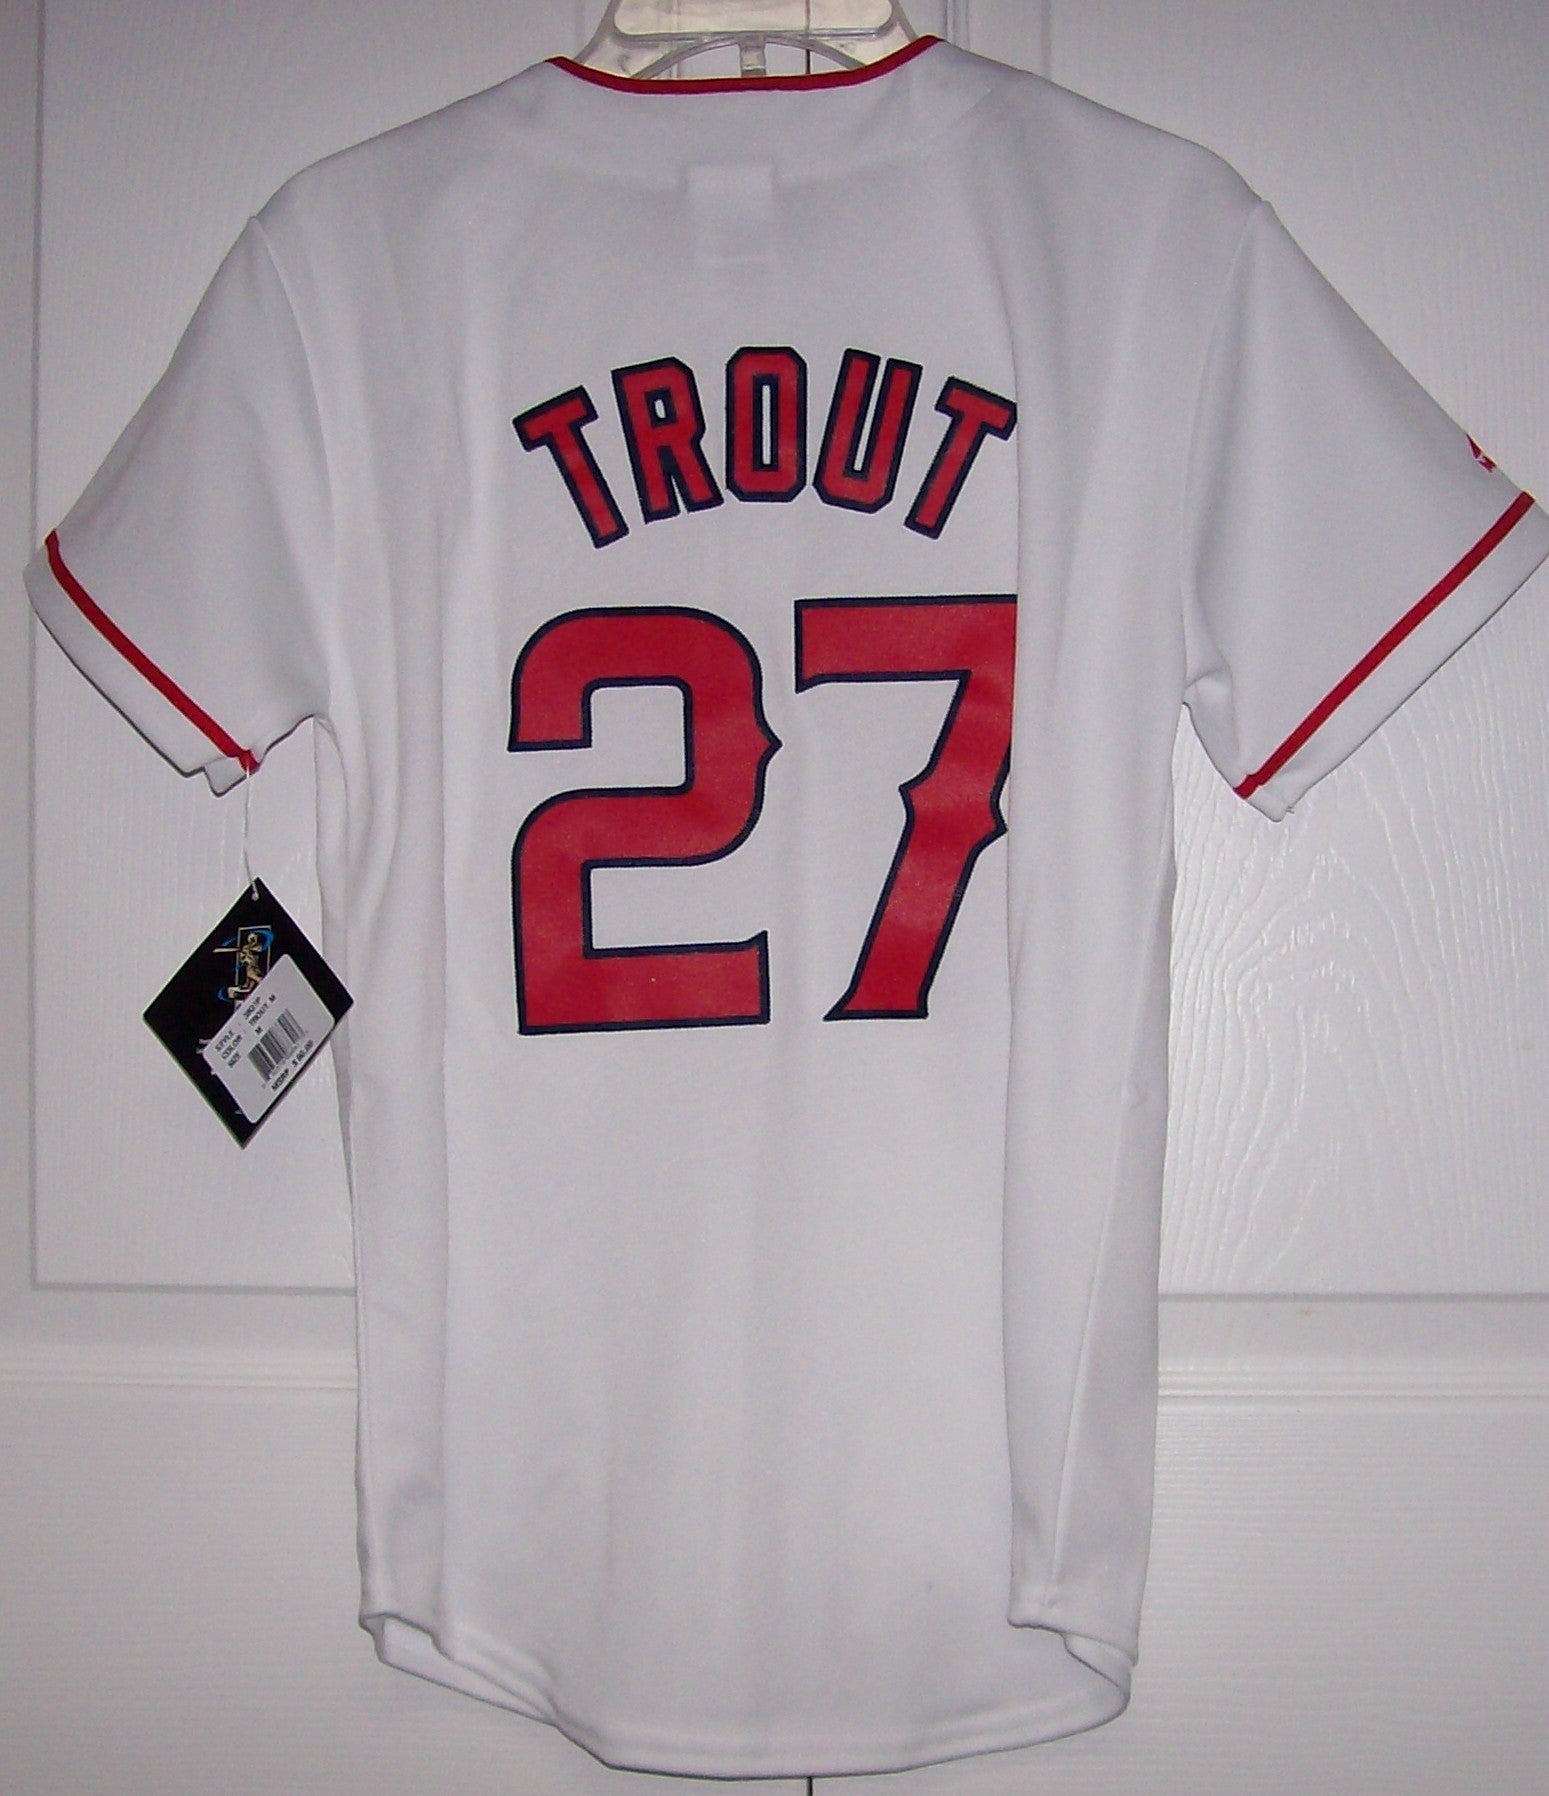 Los Angeles Angels Baseball Love Tee Shirt 3T / Red